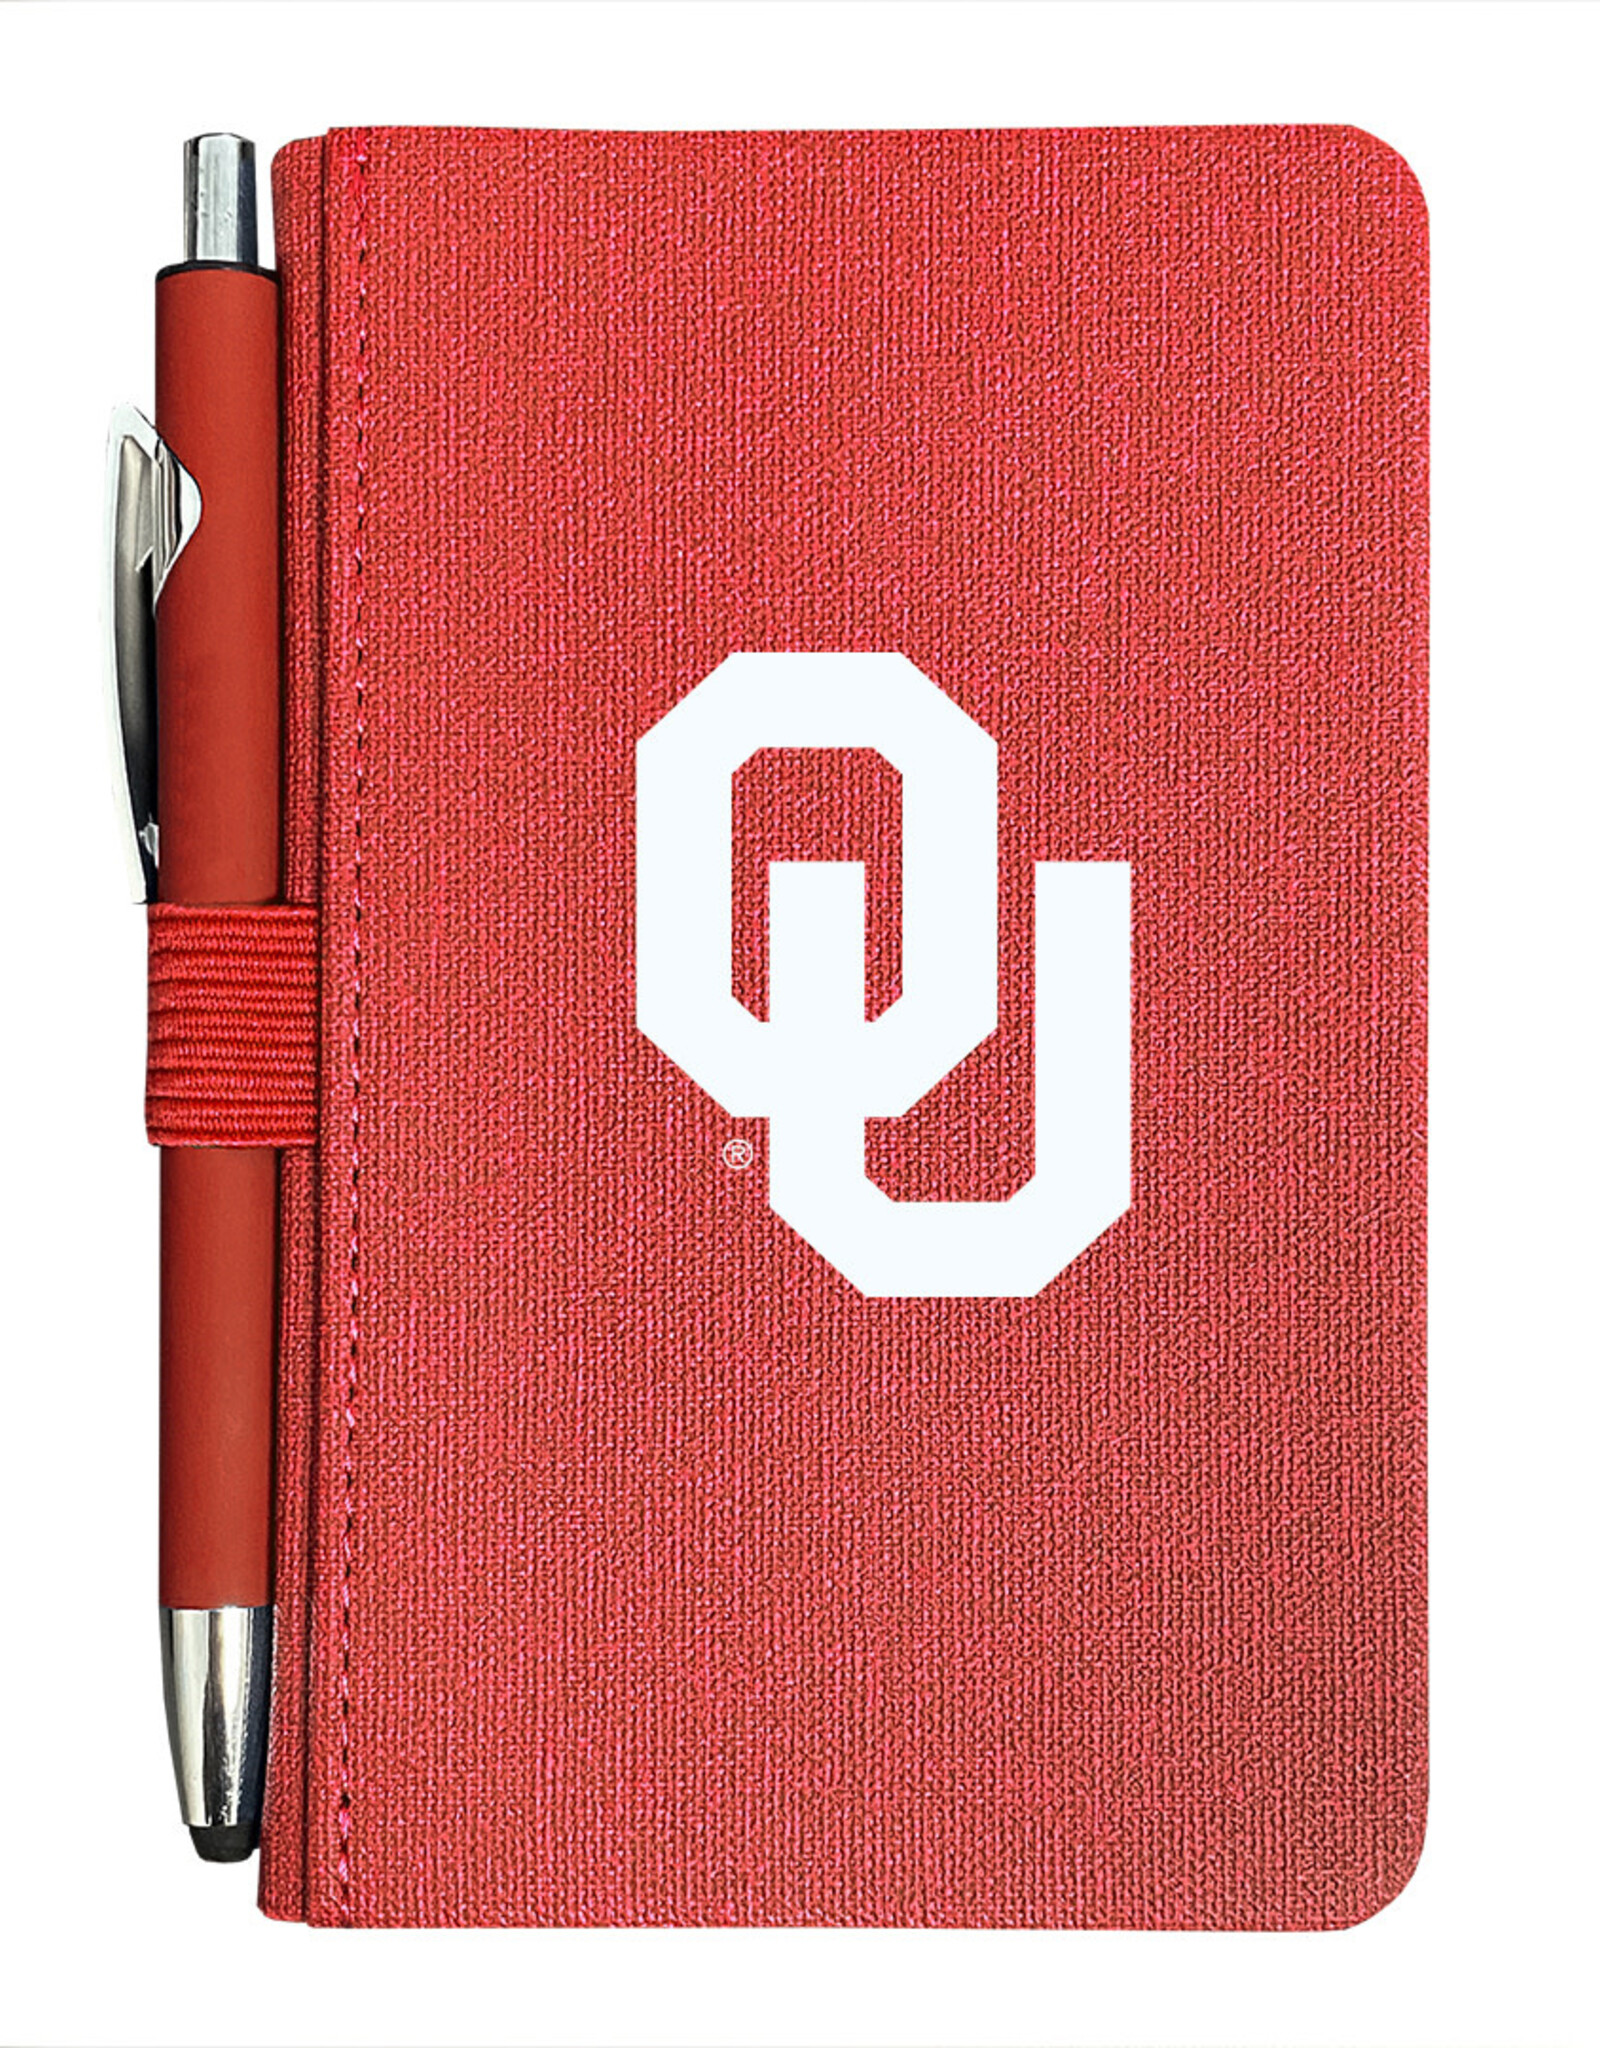 The Fanatic Group OU Crimson Pocket Journal